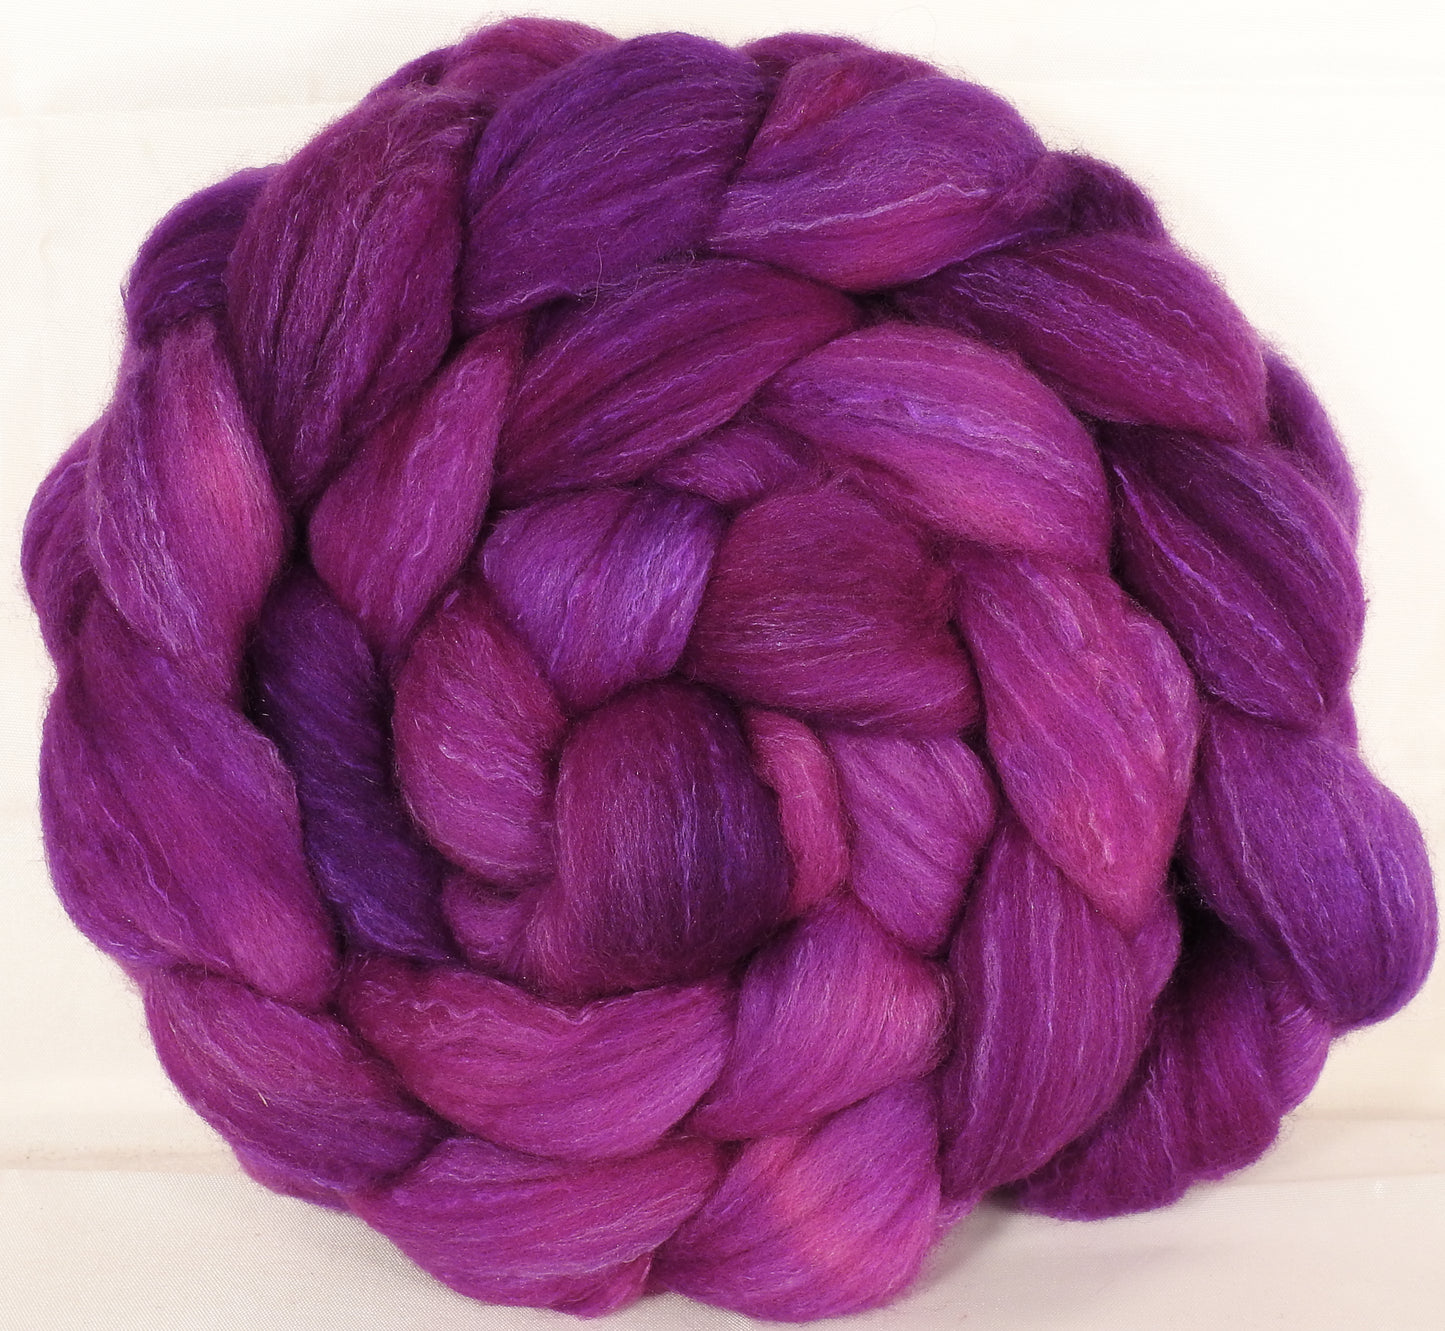 Hand dyed top for spinning -Fuchsia - (5.3 oz.) Organic polwarth /Tussah silk (80/20) - Inglenook Fibers